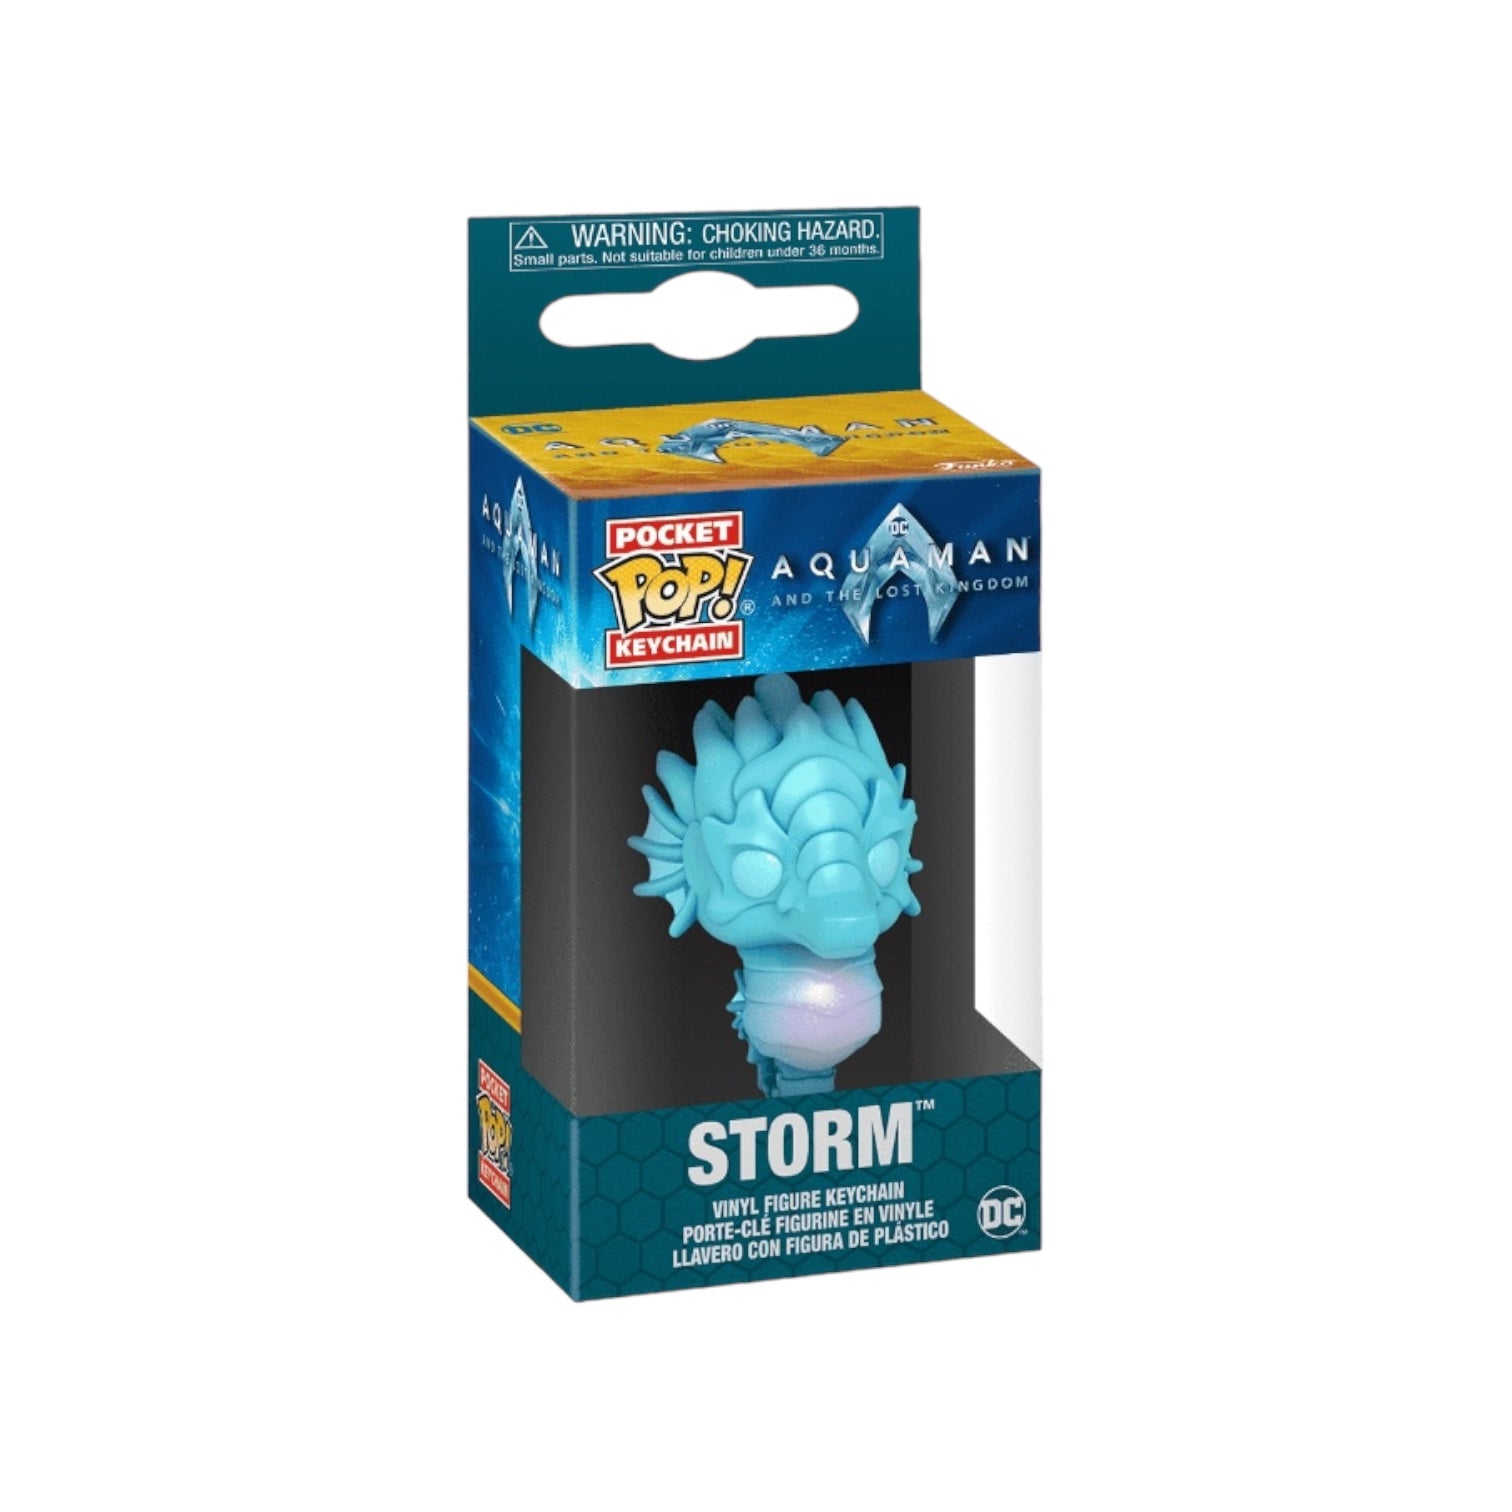 Storm Funko Pocket Pop Keychain - Aquaman and the lost kingdom